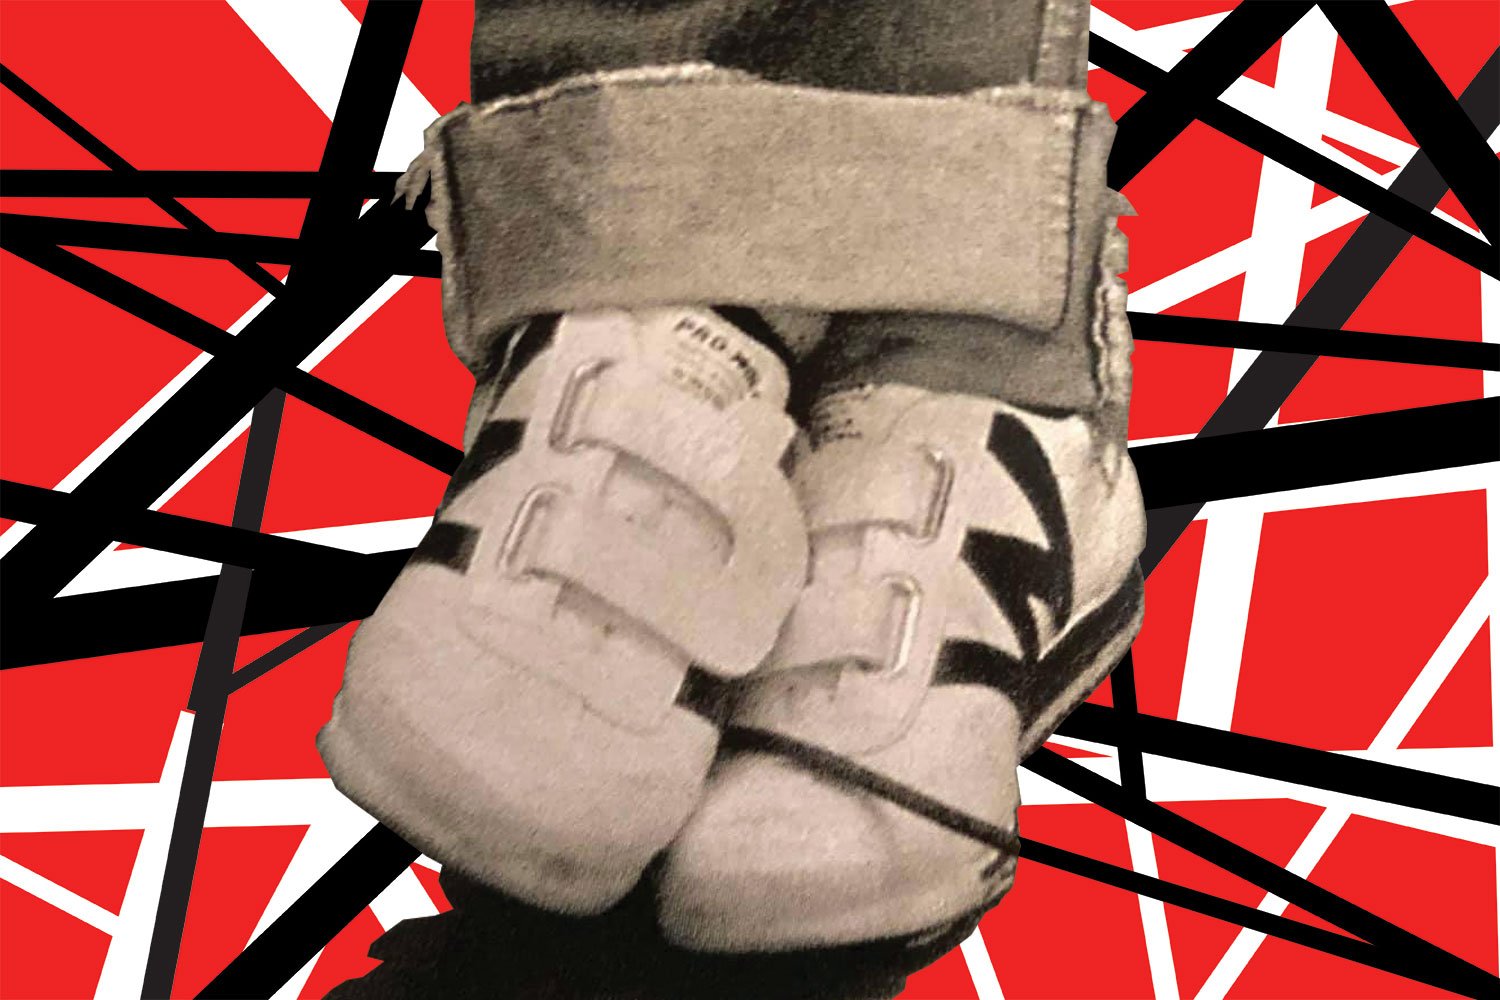 Sanders Ouderling hooi W logo shoes — The Deffest®. A vintage and retro sneaker blog. — Blog